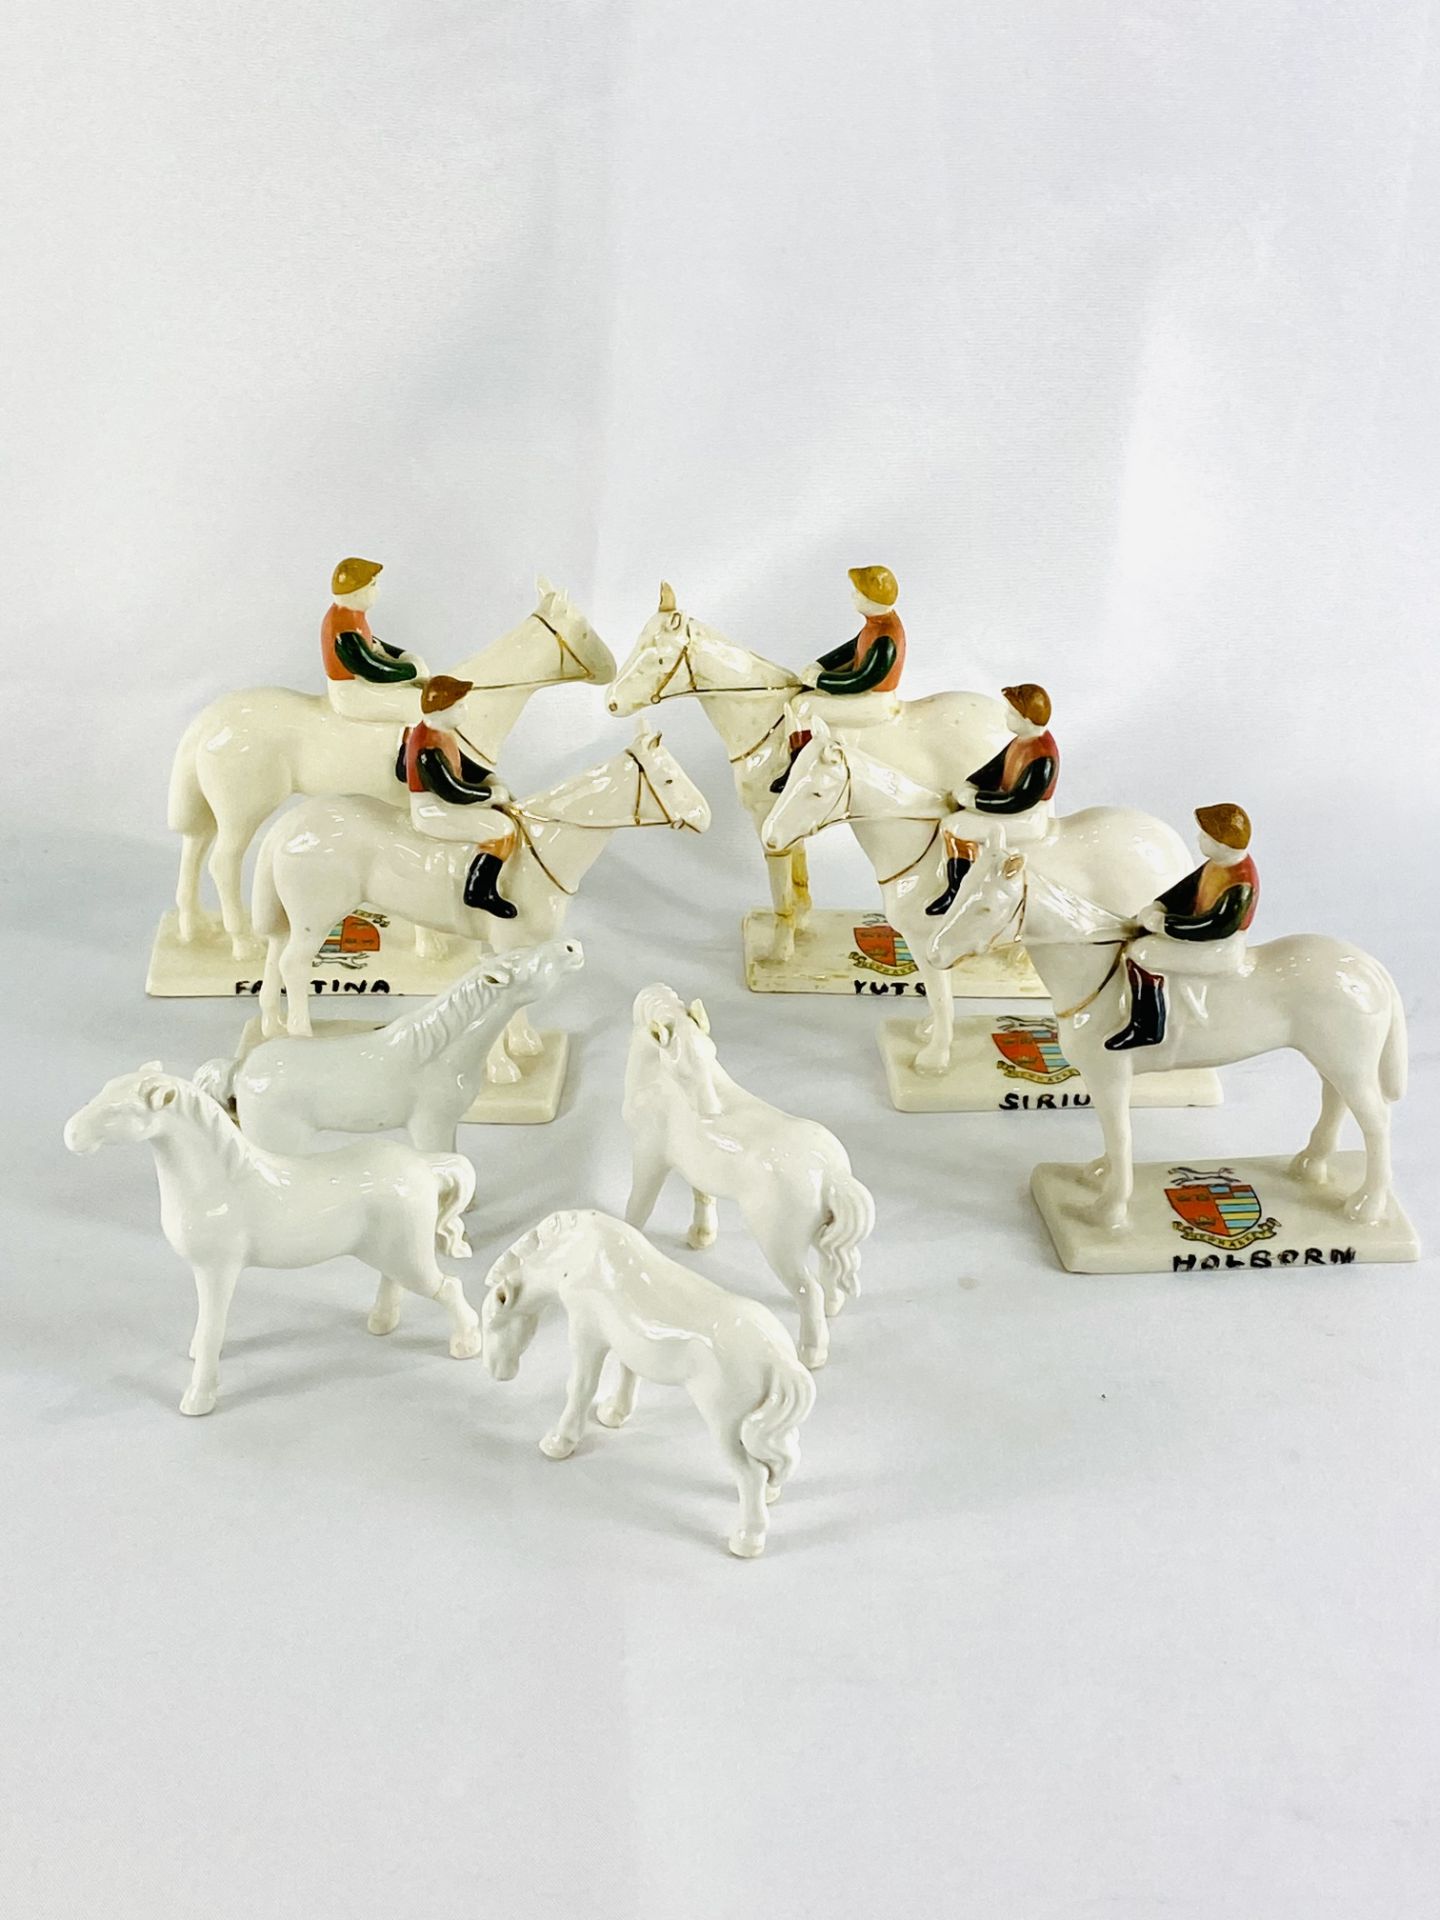 Carlton ware porcelain horses - Image 2 of 3